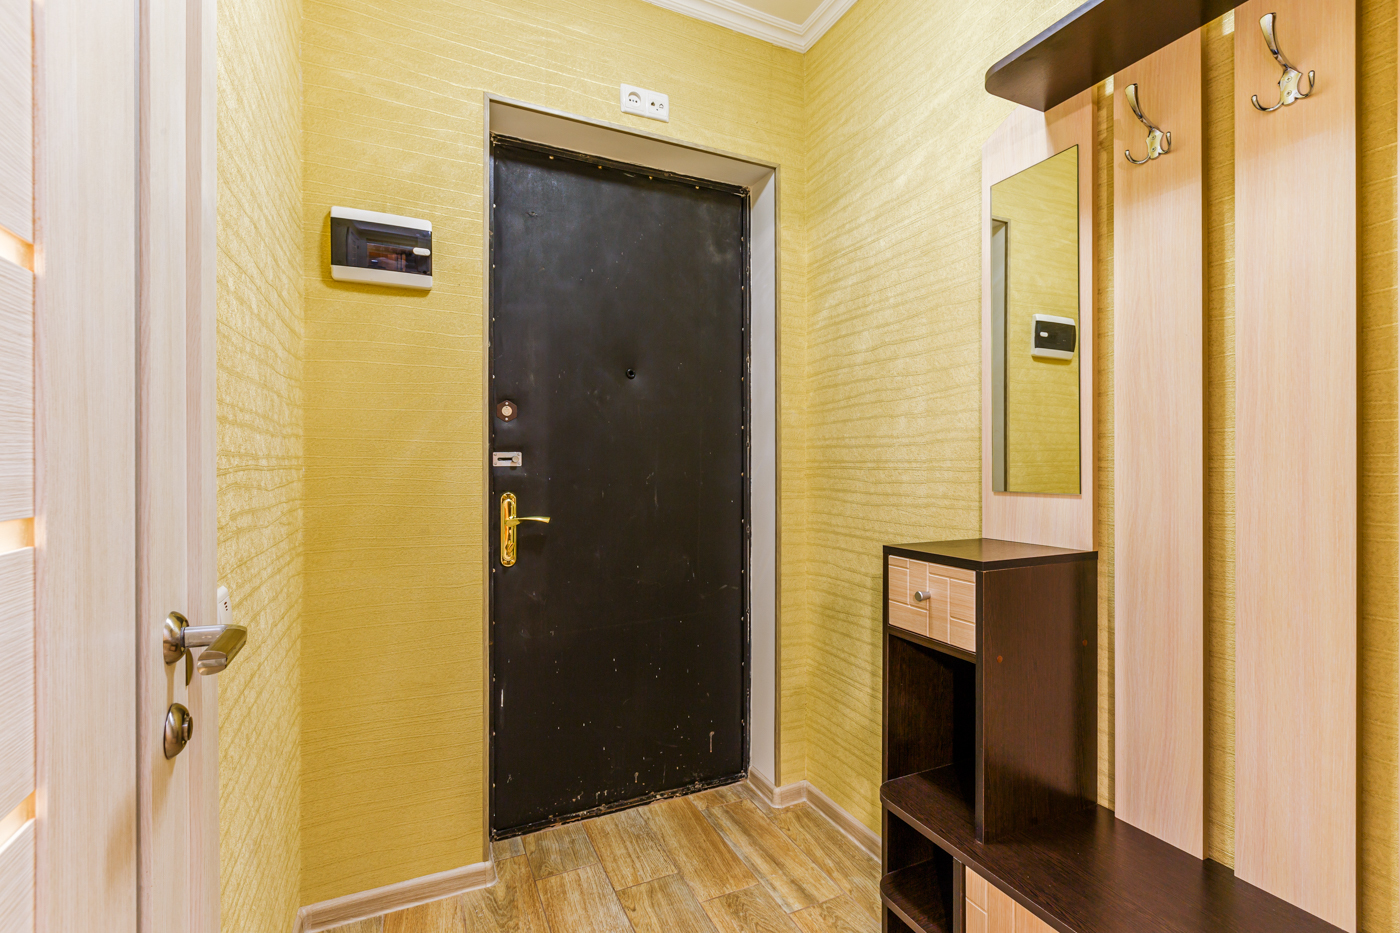 Двухкомнатная квартира на ул. Азовская 33 к1 (50кв.м)